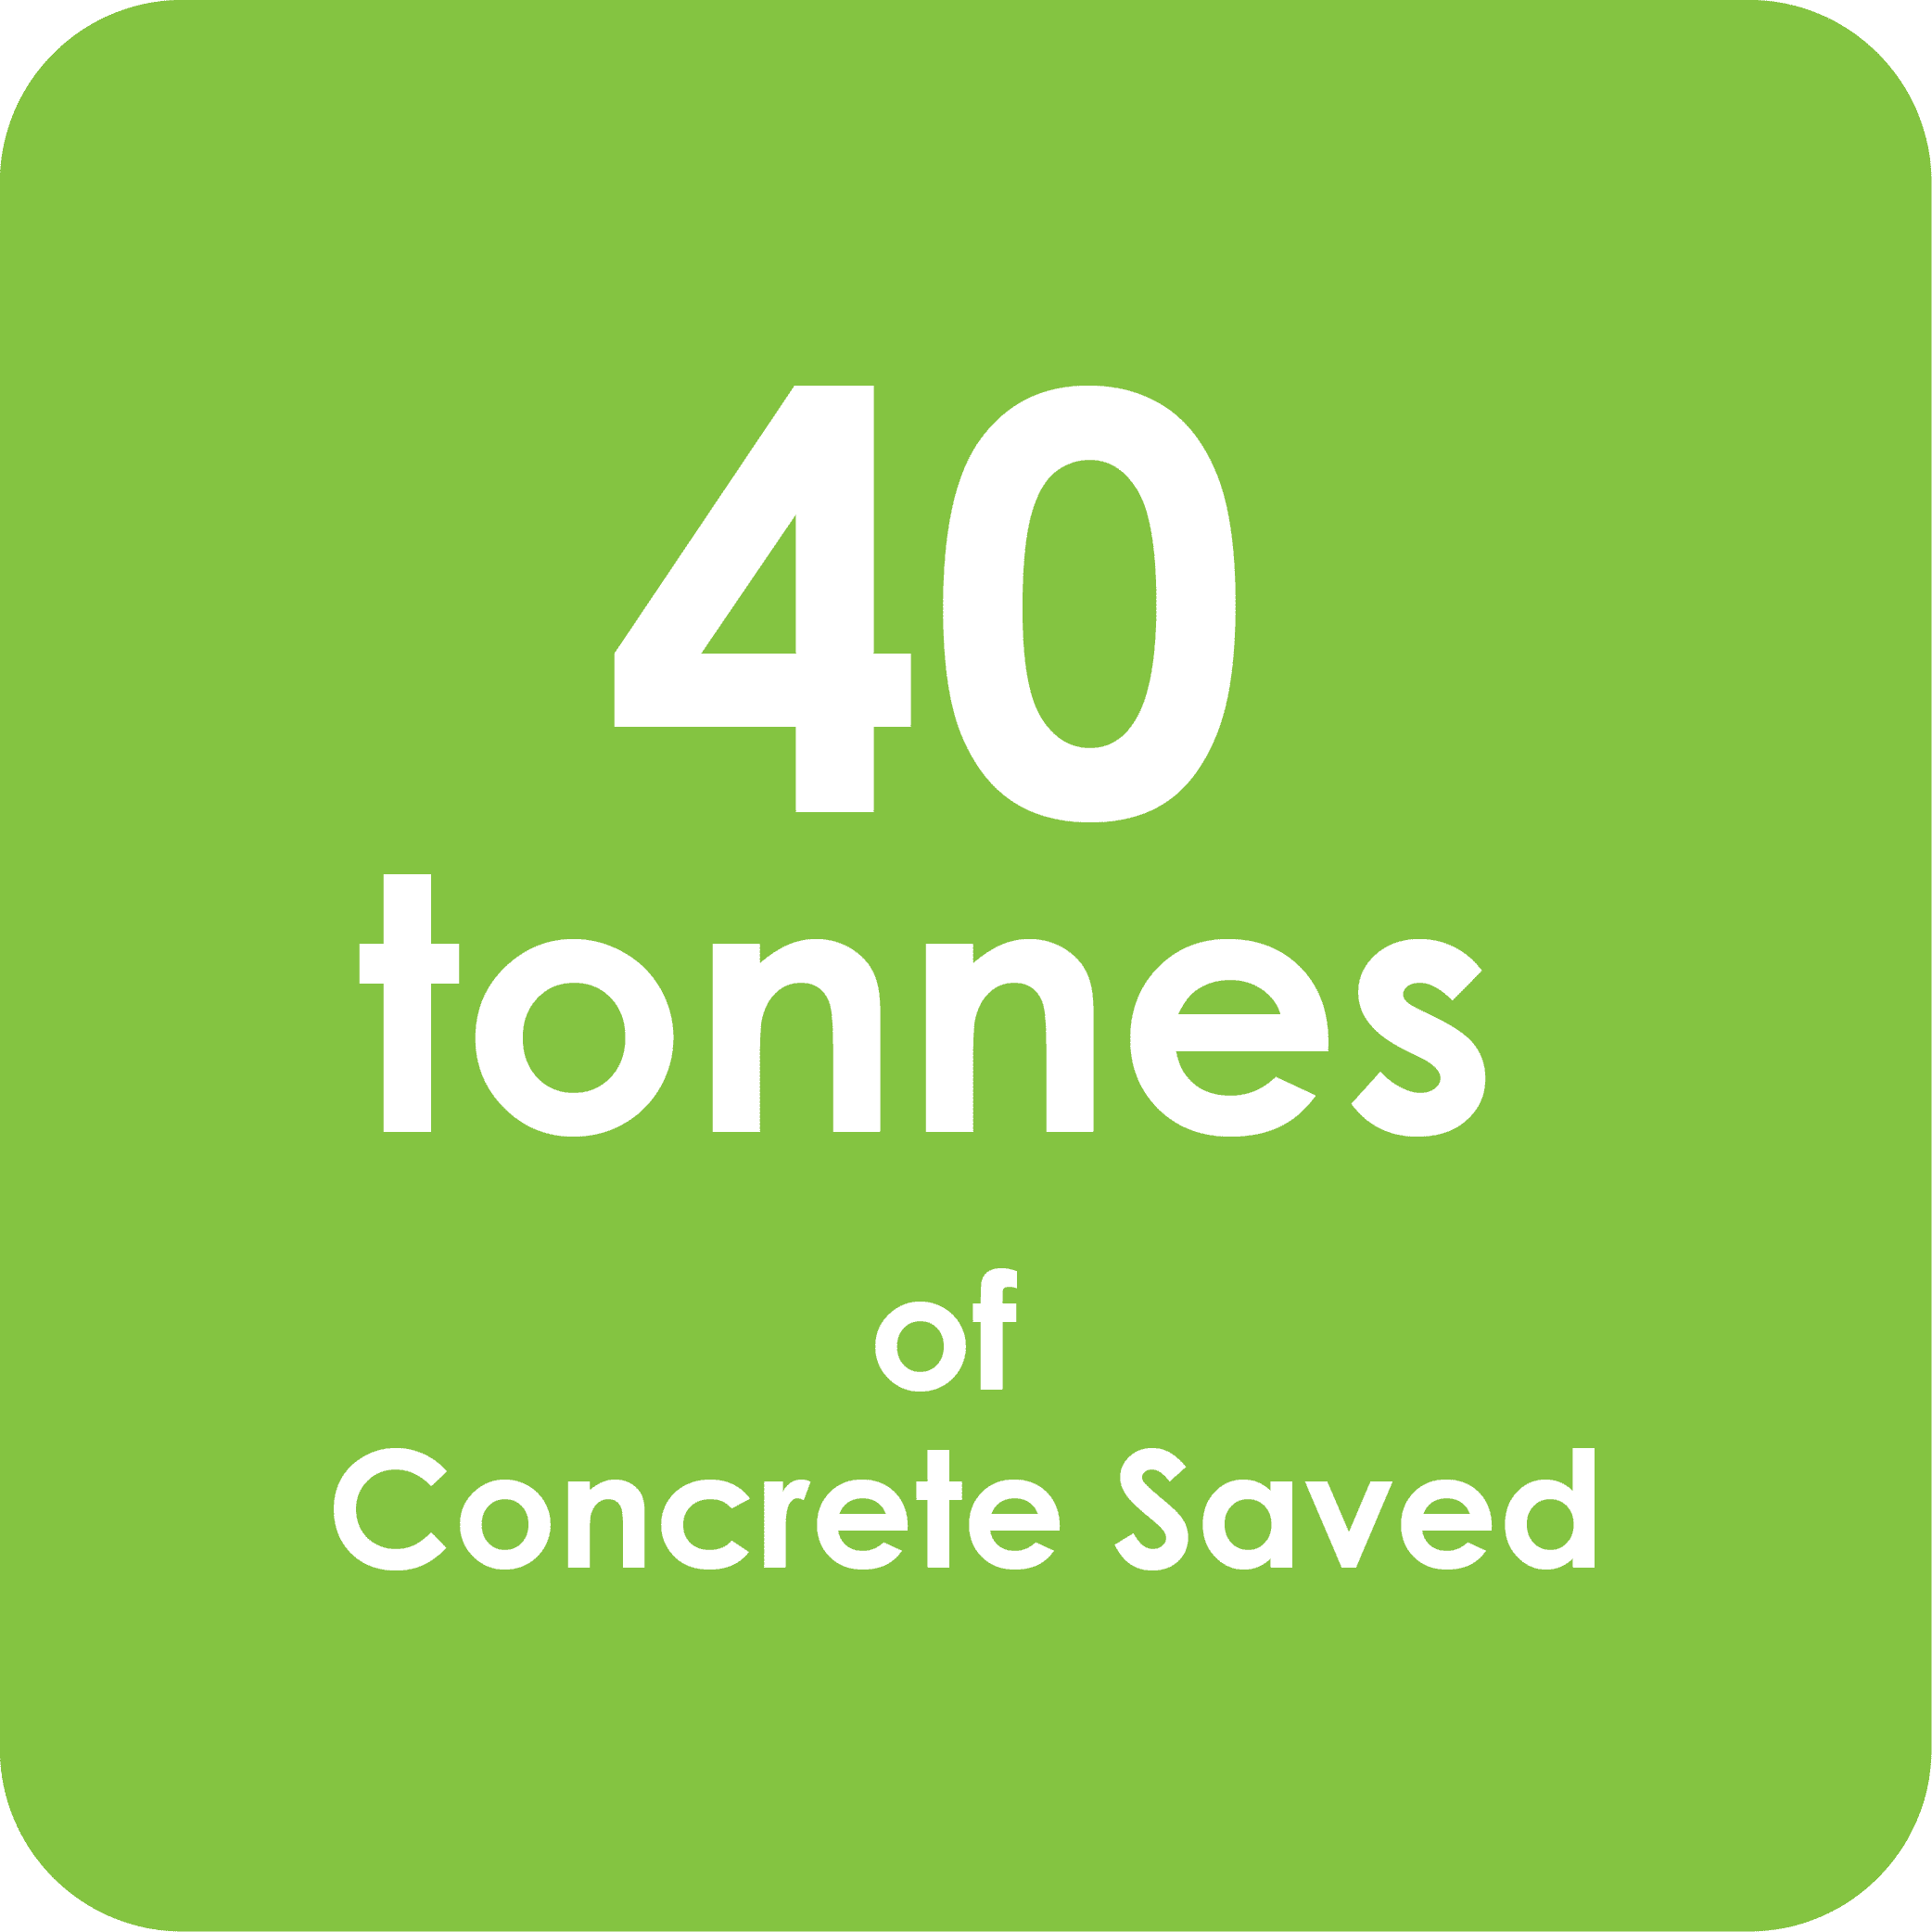 40 tonnes of concrete saved